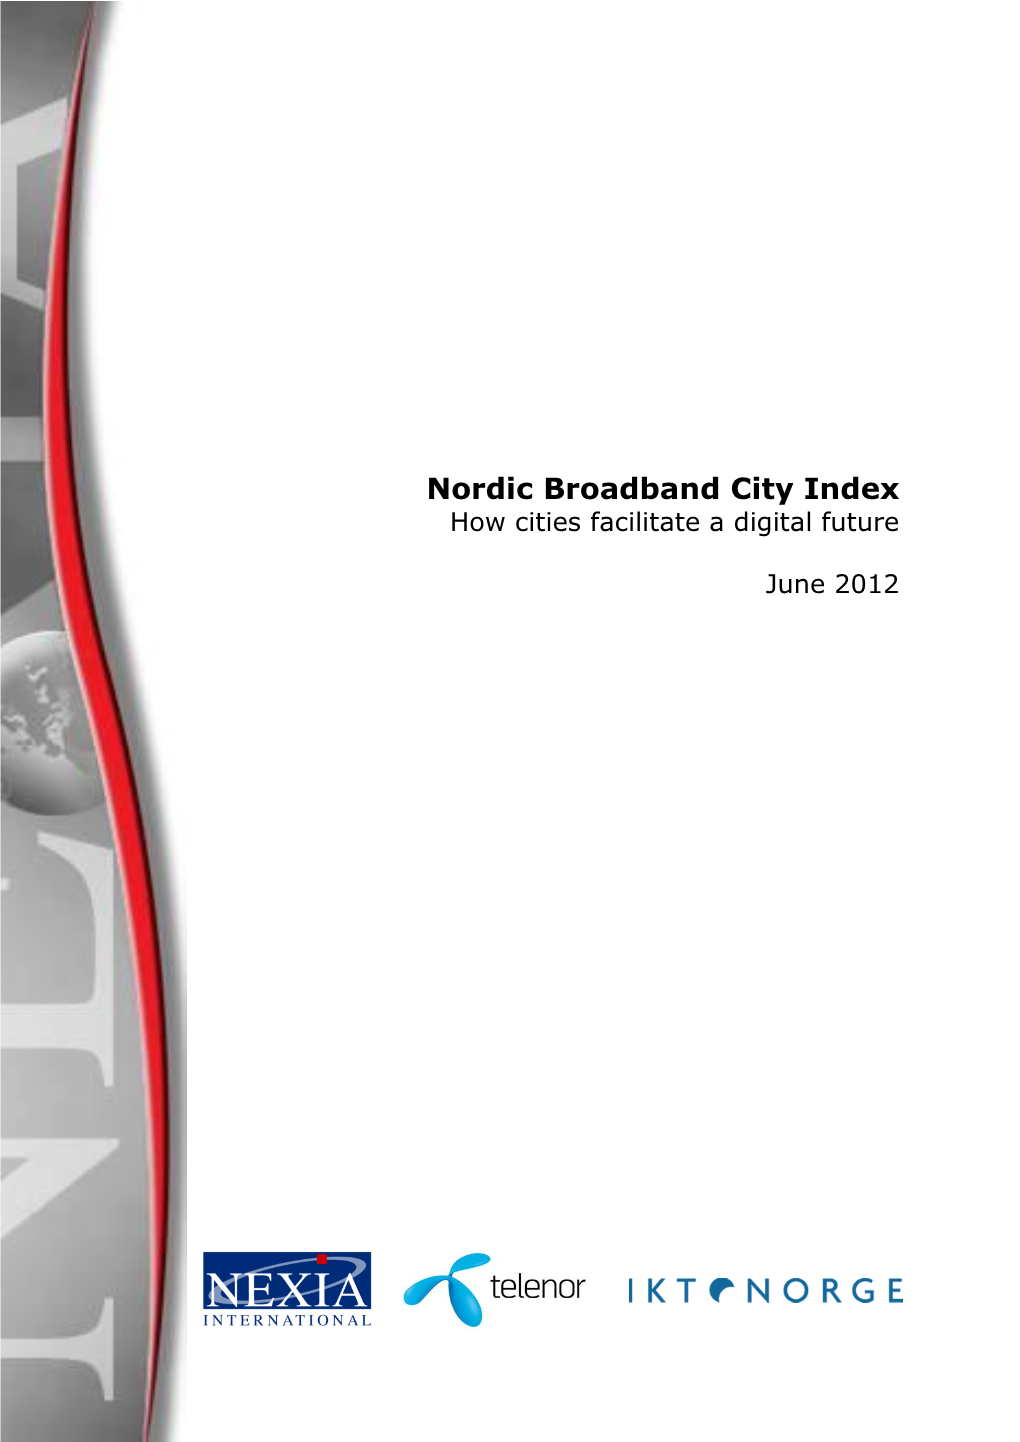 Nordic Broadband City Index 2012